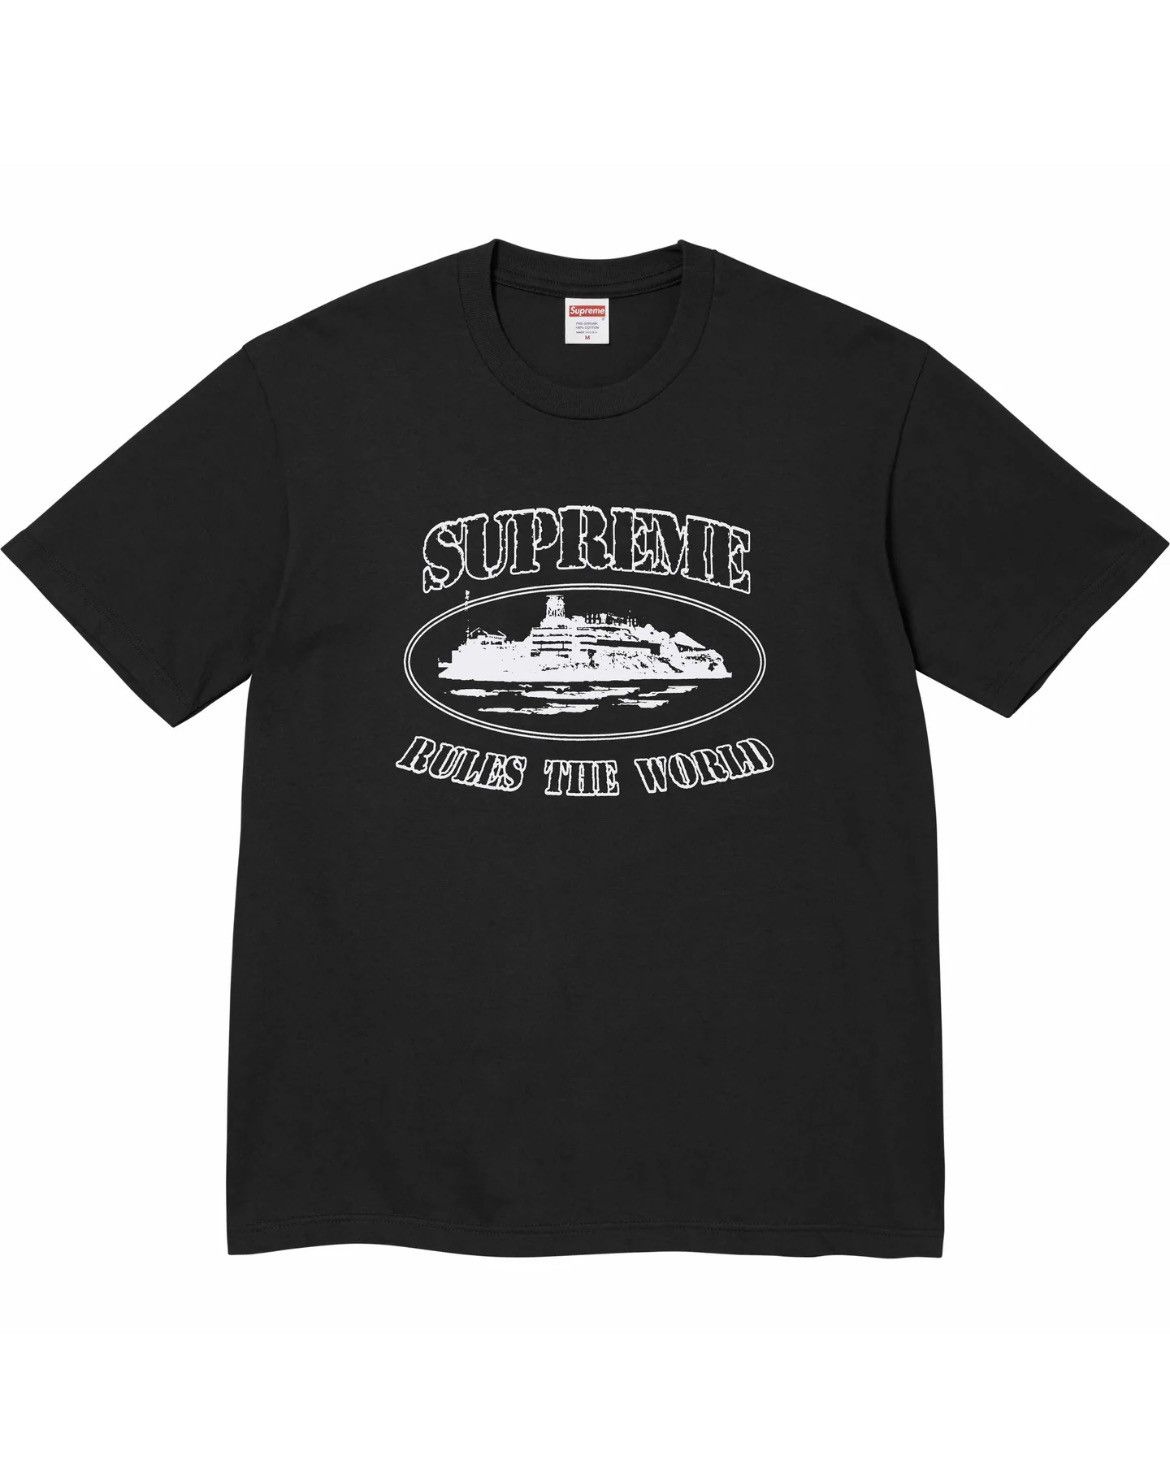 Supreme Supreme Corteiz Rules The World Tee Shirt FW23 | Grailed